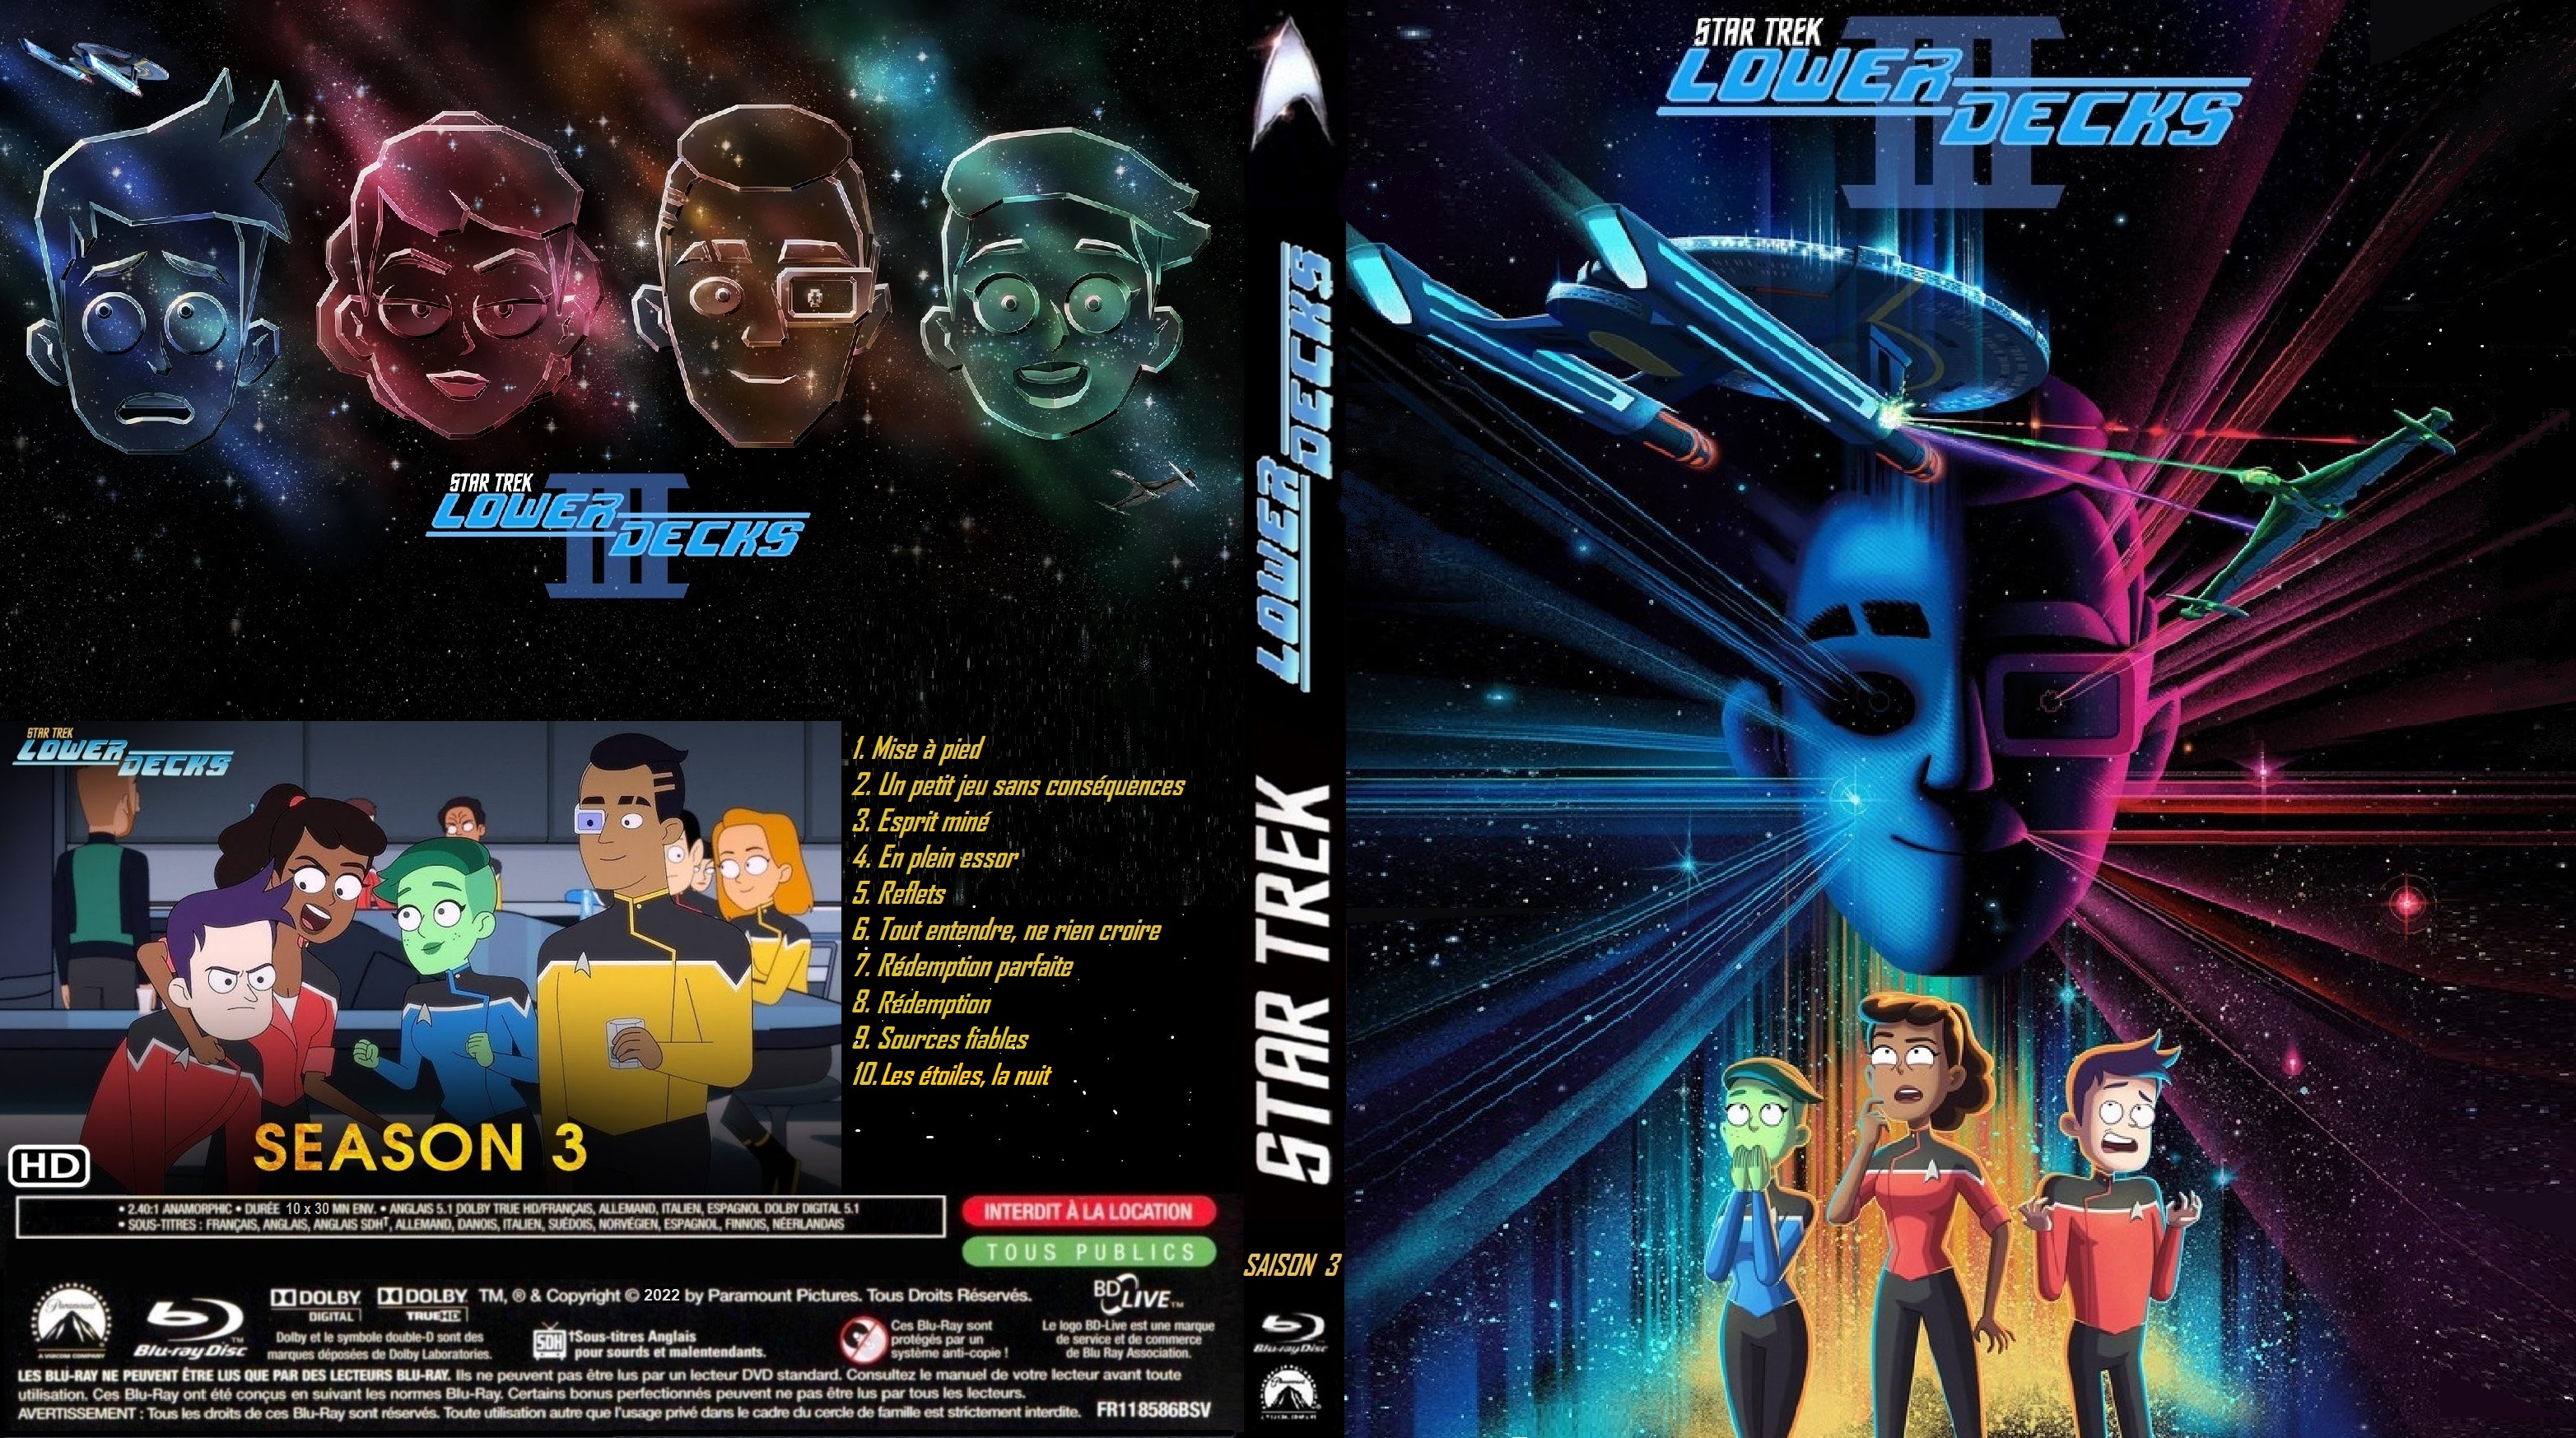 Jaquette DVD Star Trek Lower Decks saison 3 custom (BLU-RAY)